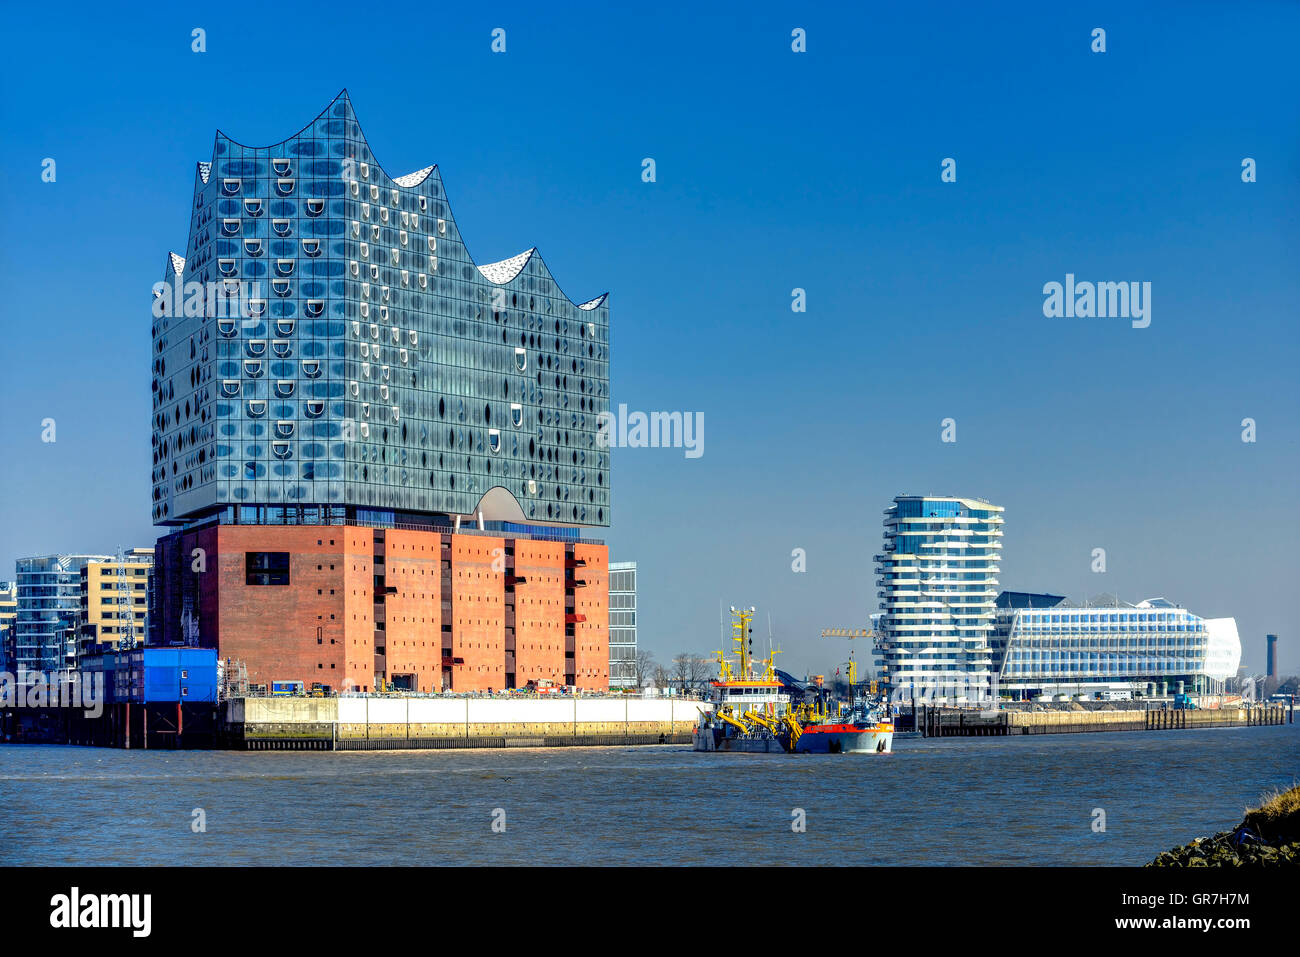 Elbe Philharmonic Hall In Hamburg, Germany Stock Photo - Alamy